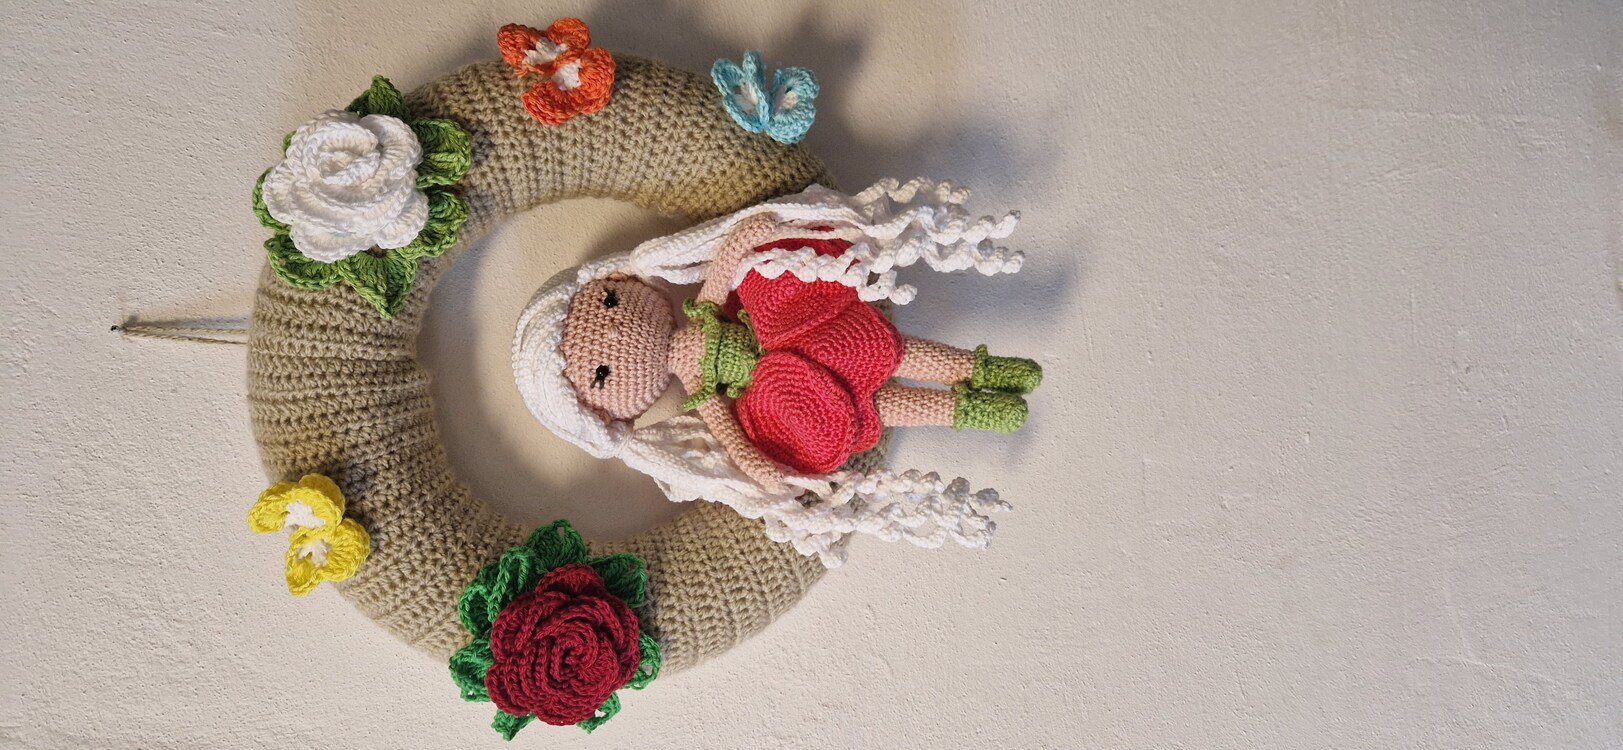 Crochet pattern doll, flower fairy amigurumi